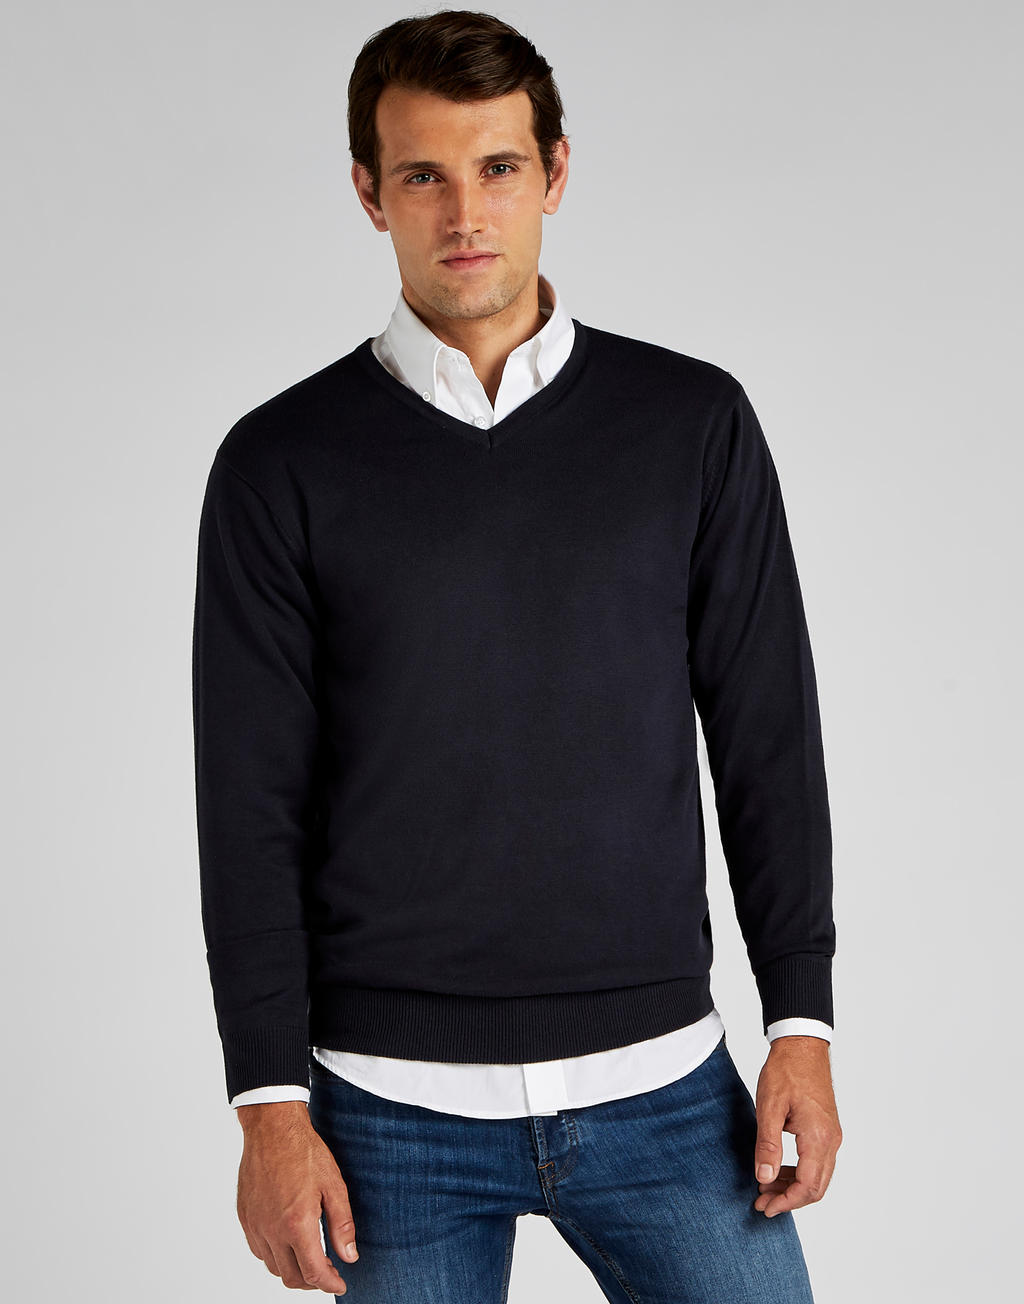 Classic Fit Arundel V Neck Sweater